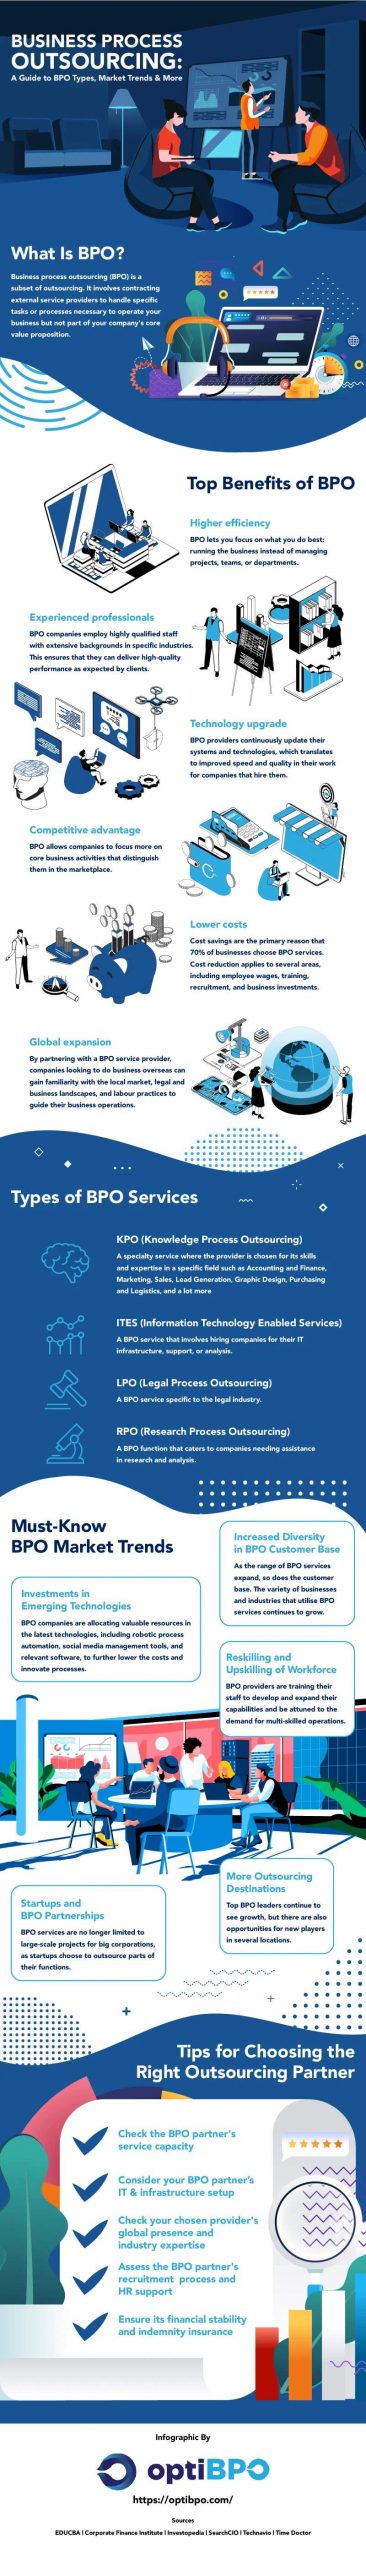 Guide to BPO Types